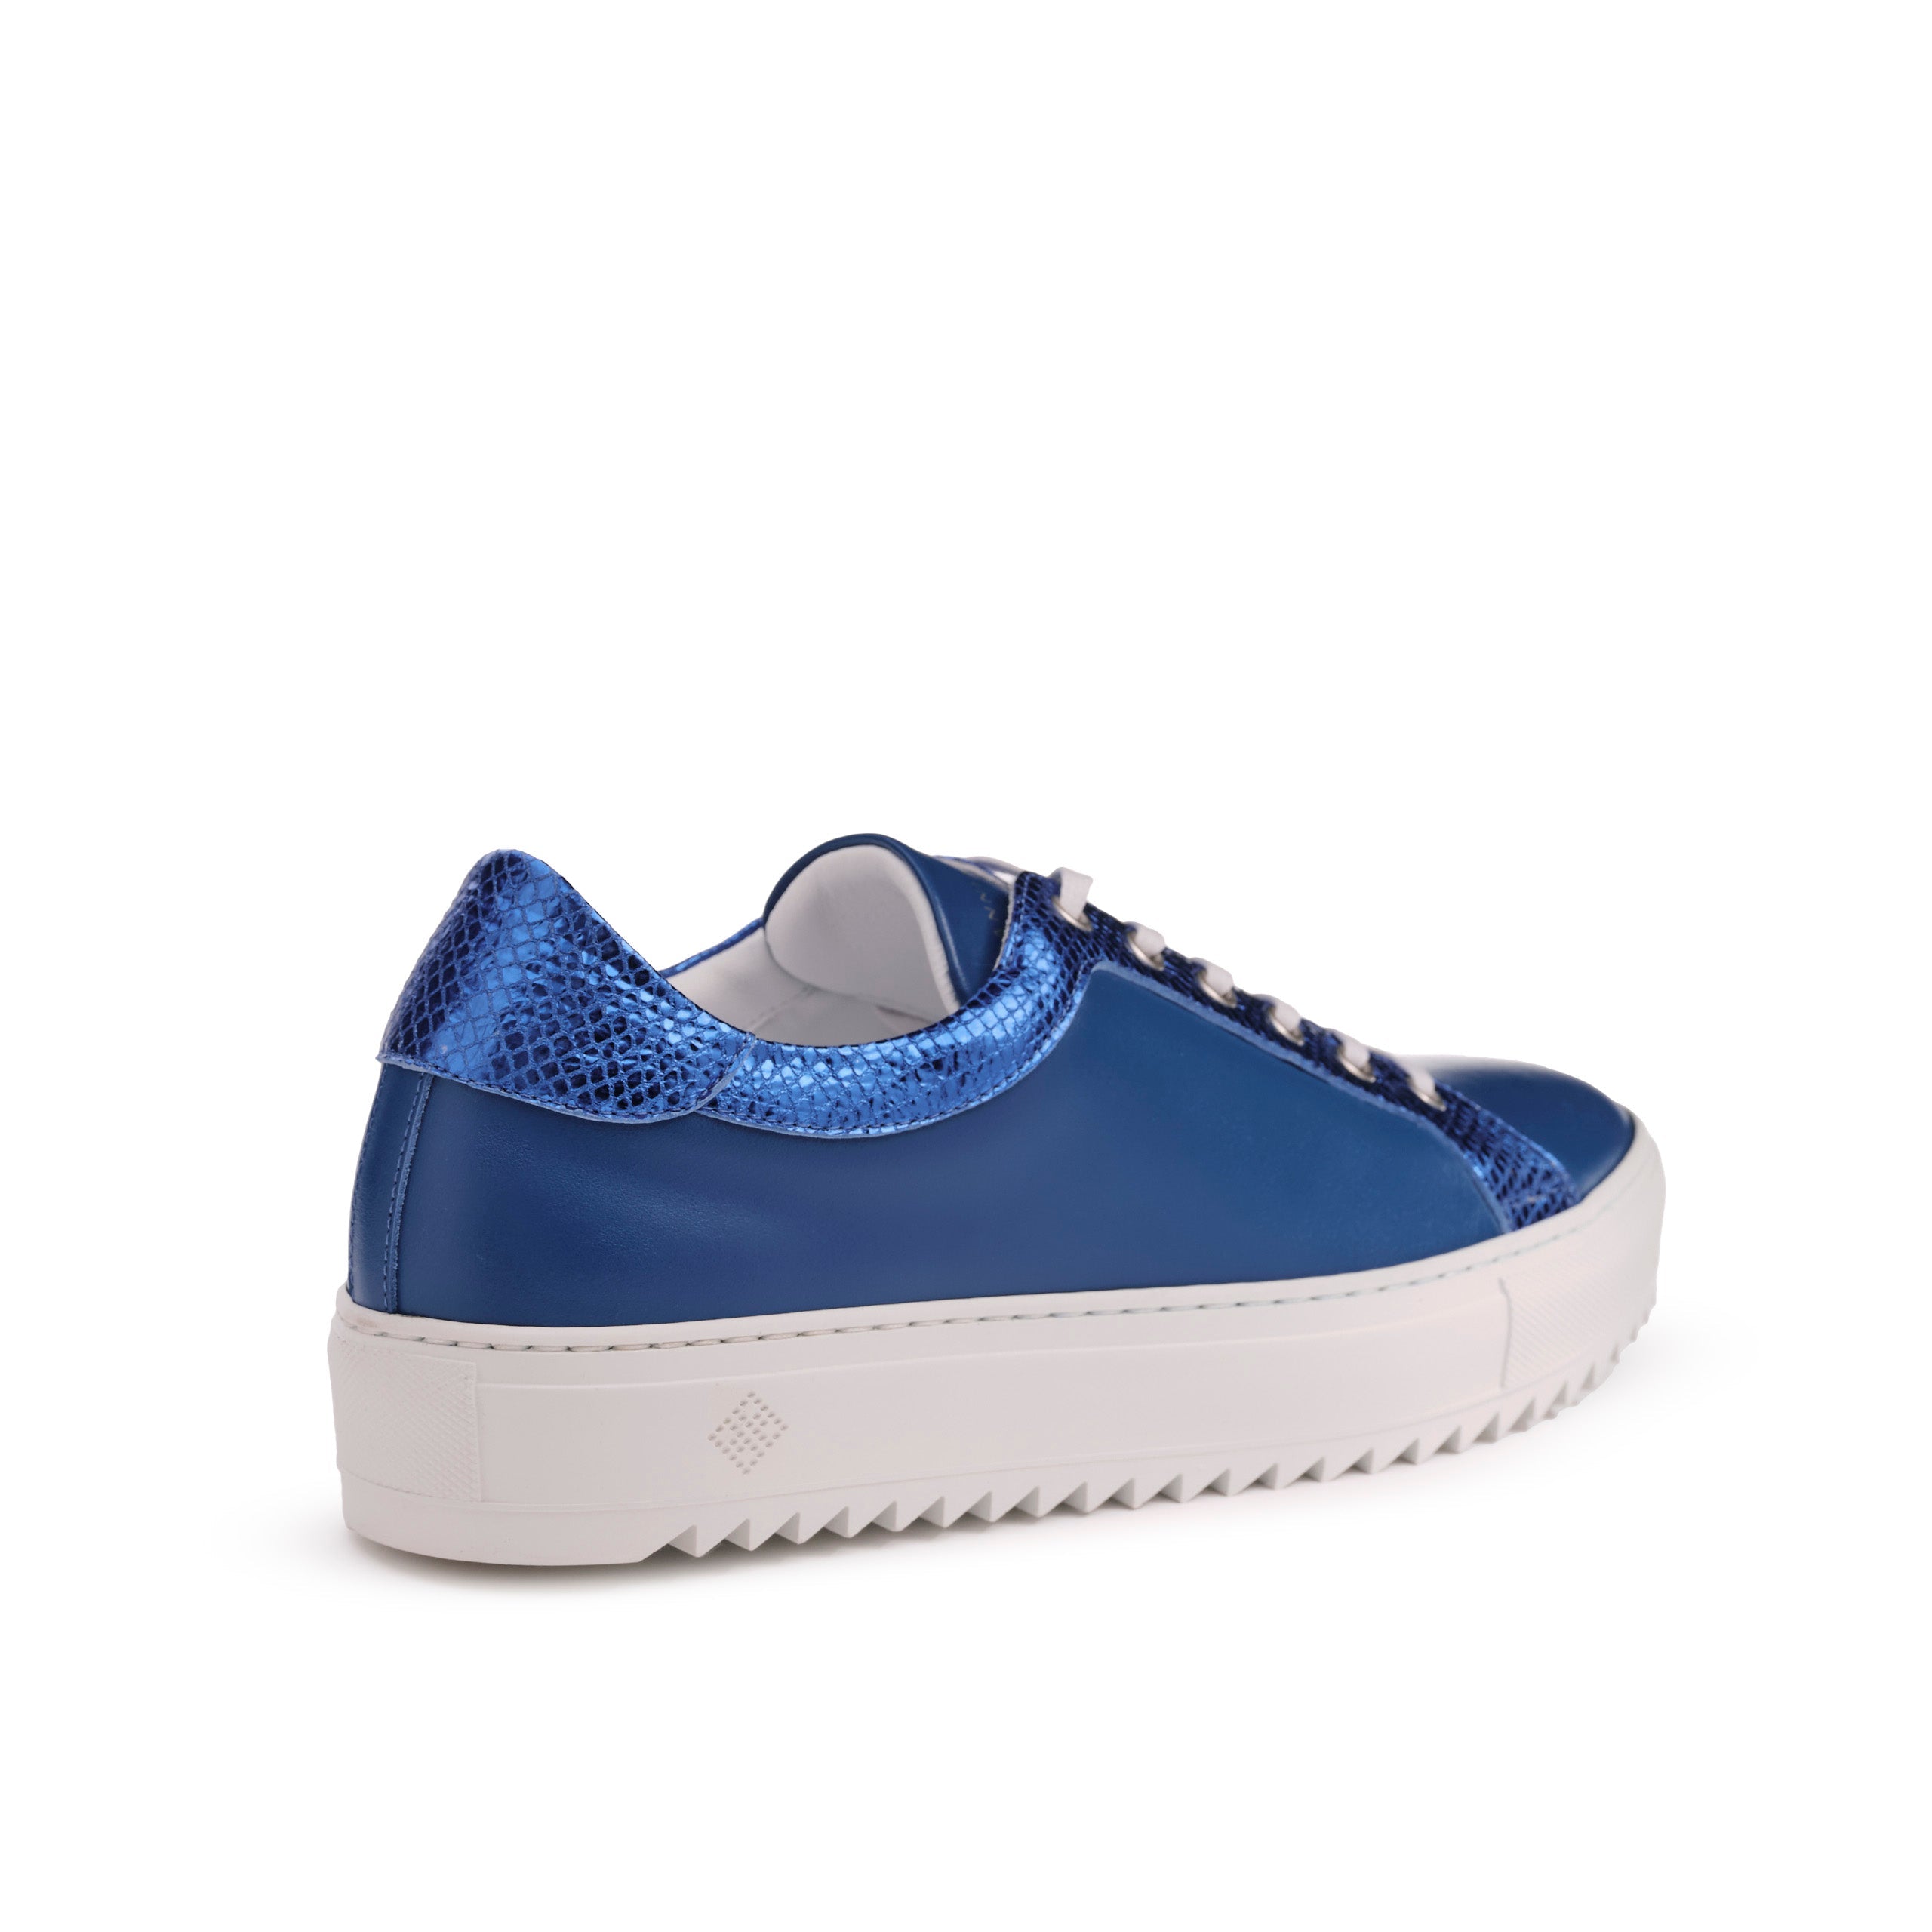 Men’s Billy Leather Low-Top Lapis Blue Sneaker - Tiannia Barnes